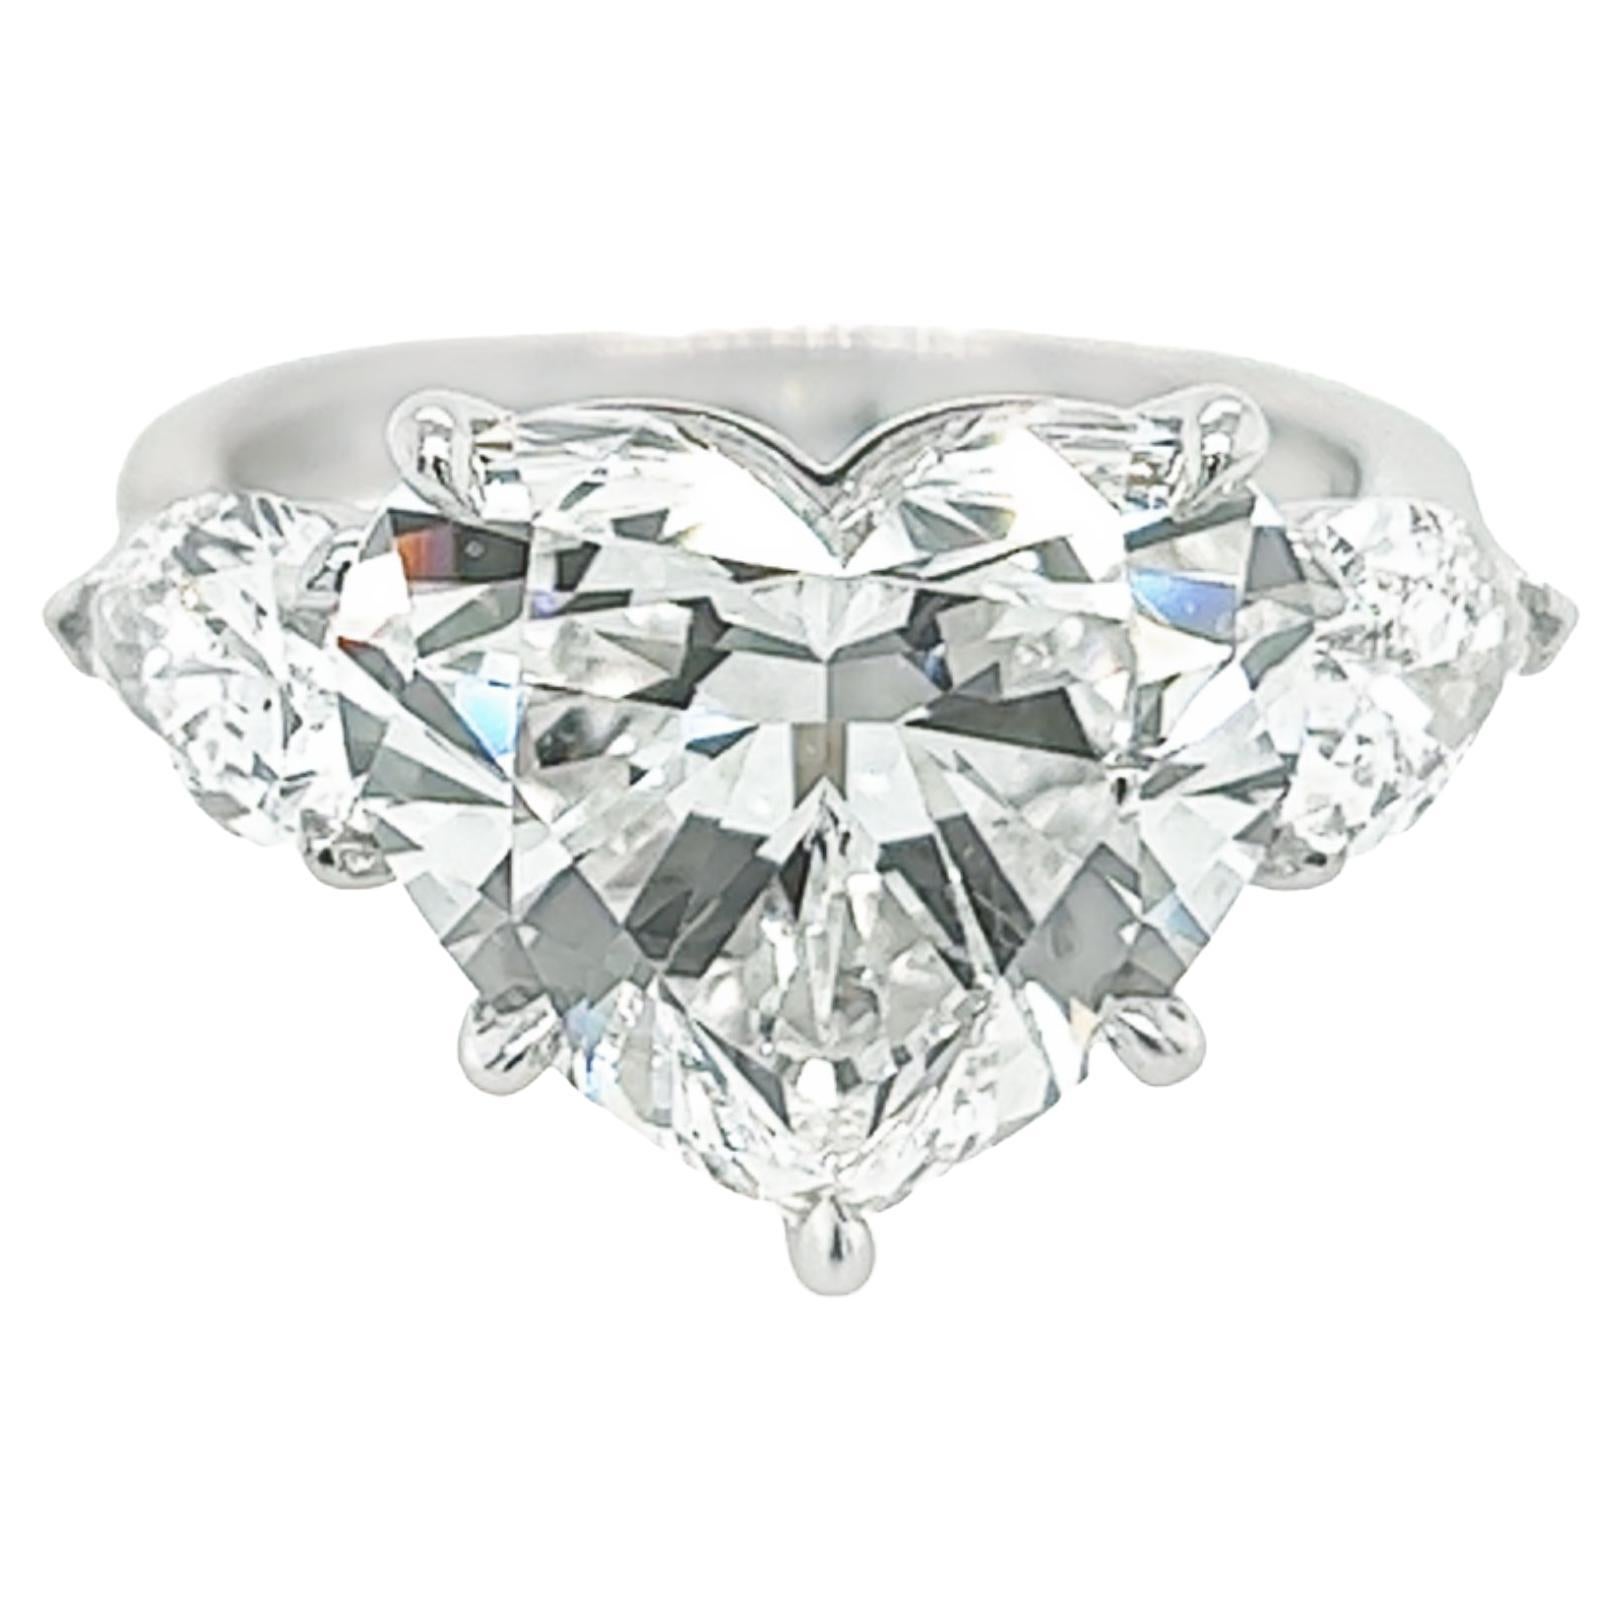 David Rosenberg 7.09 Carat Heart Shape F VS2 GIA 3 Stone Diamond Engagement Ring For Sale